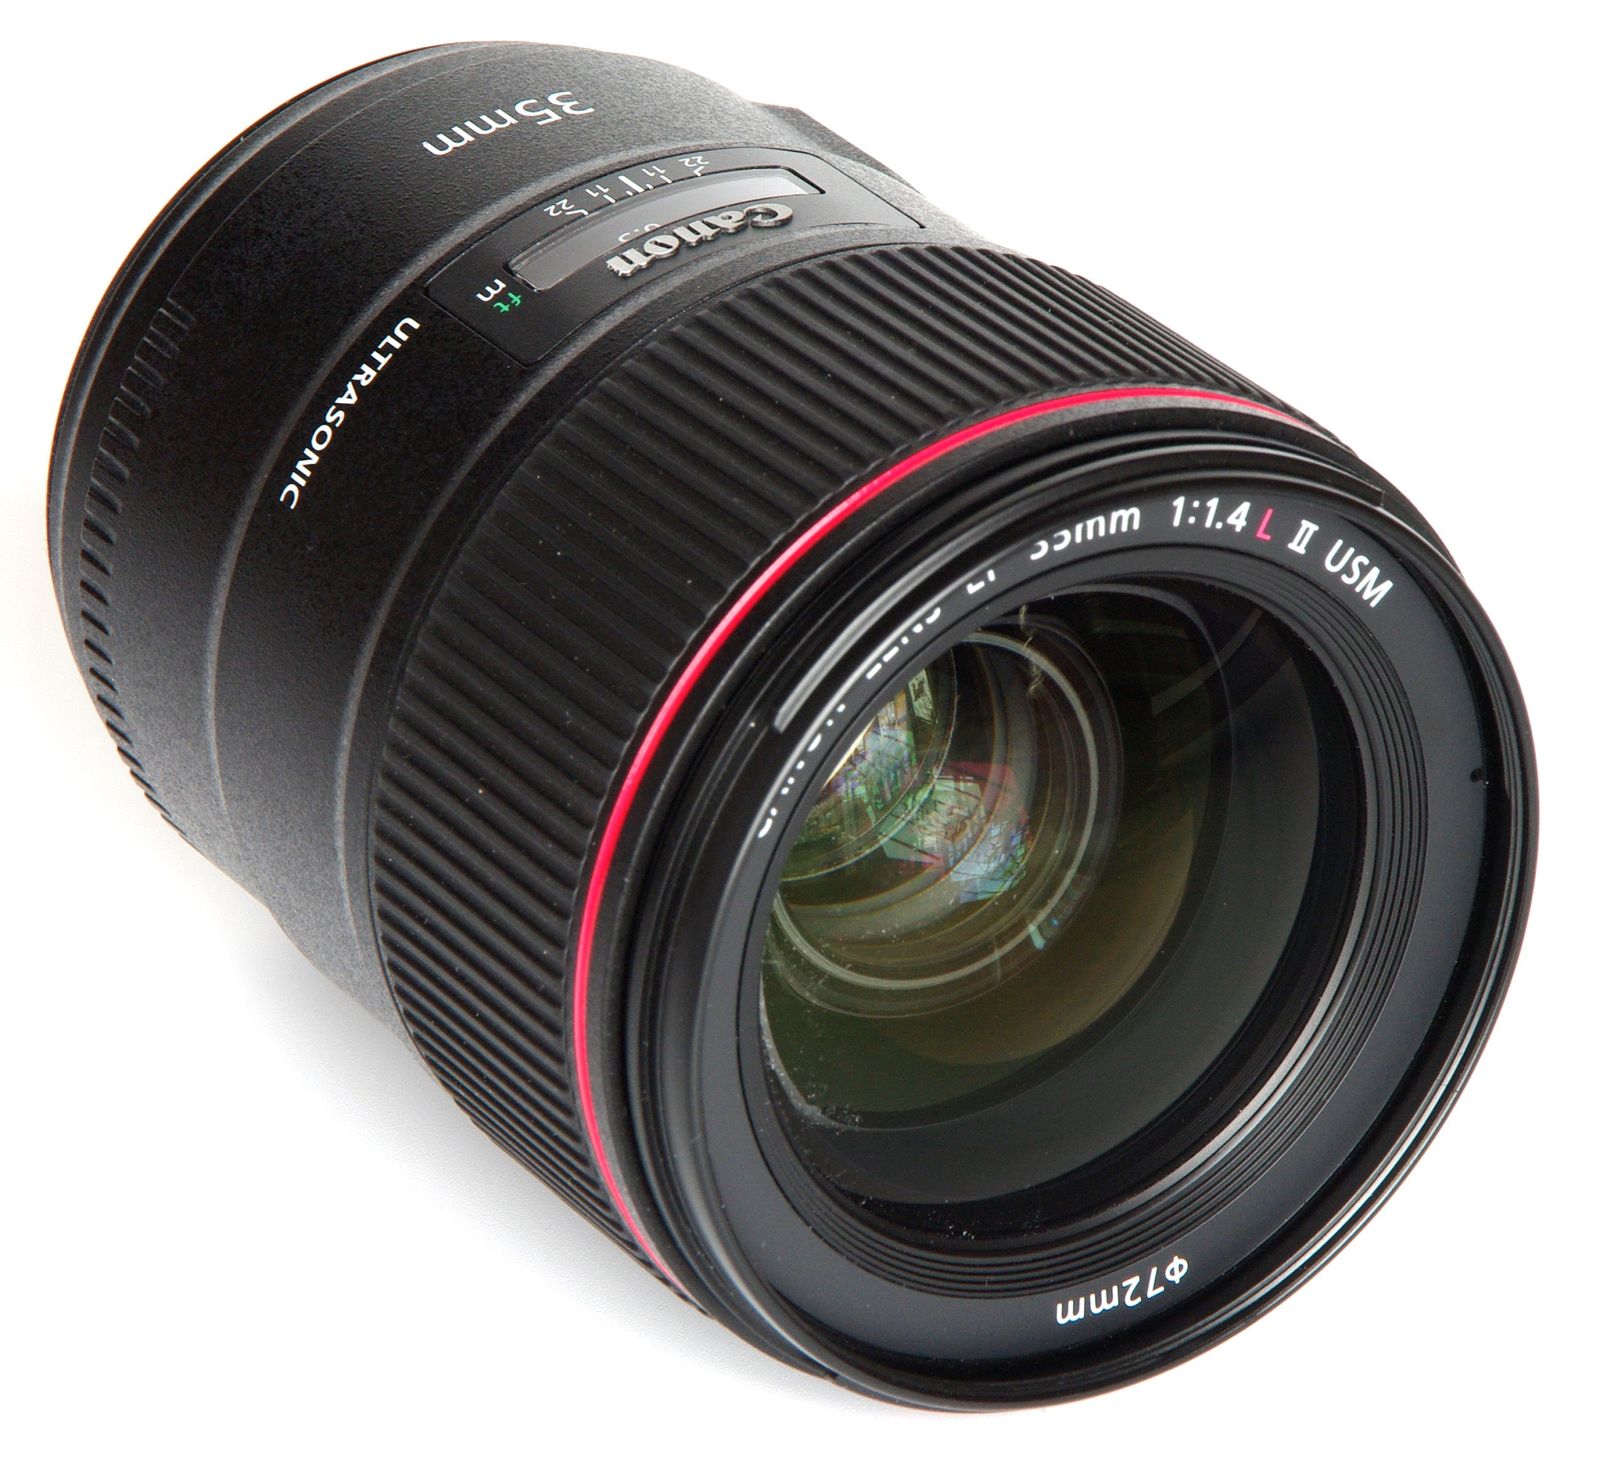 Canon EF 35mm f/1.4L II USM Lens Review